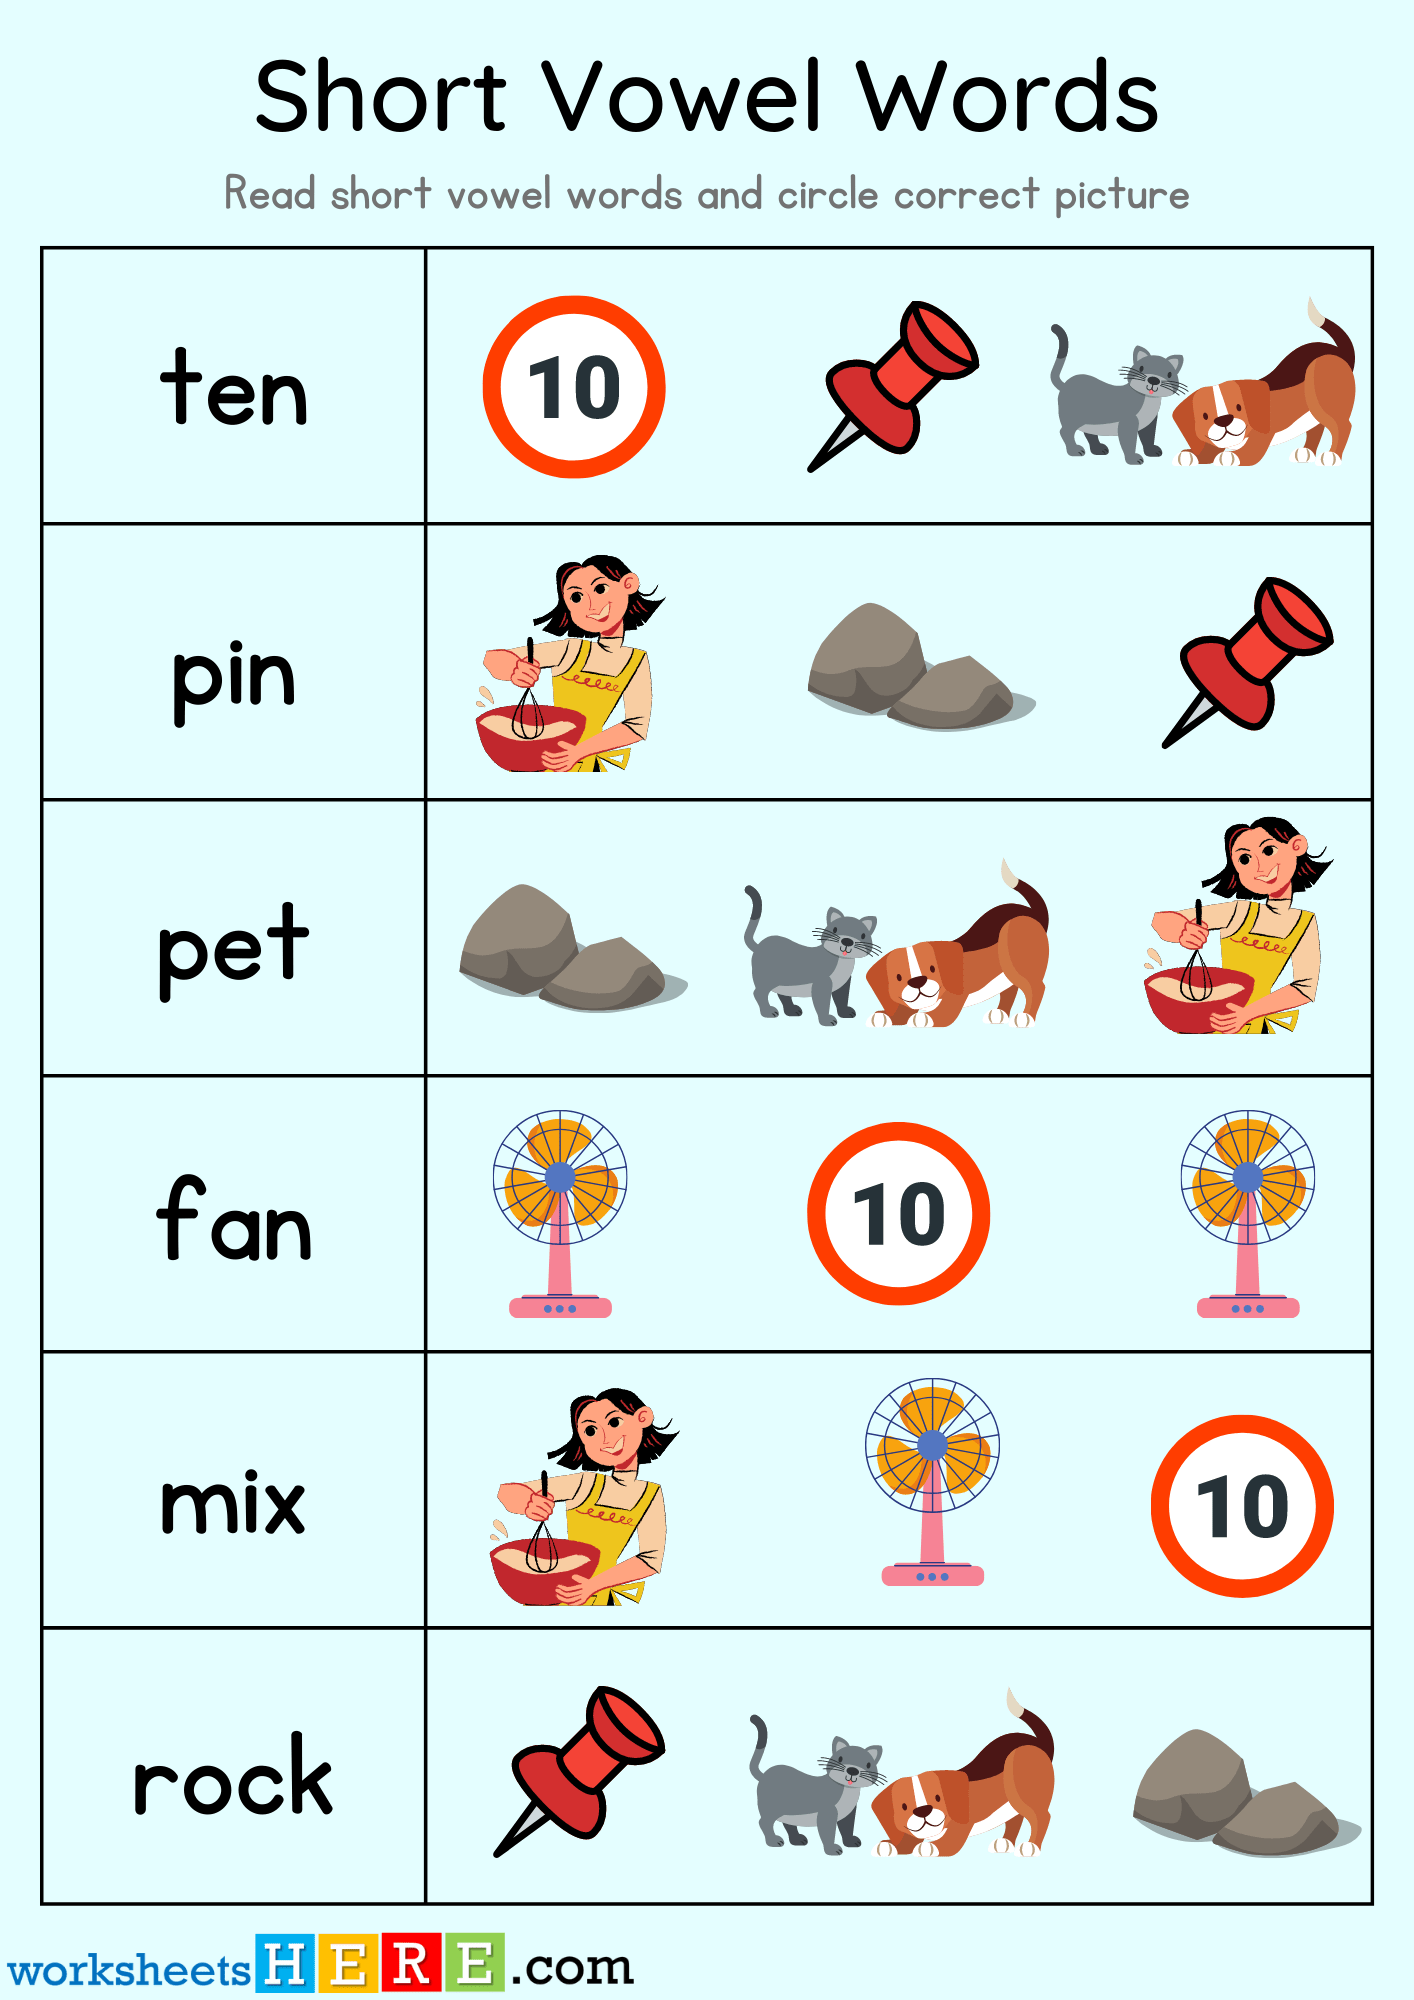 Short Vowel Pictures and Words Matching PDF Worksheet For Kindergarten